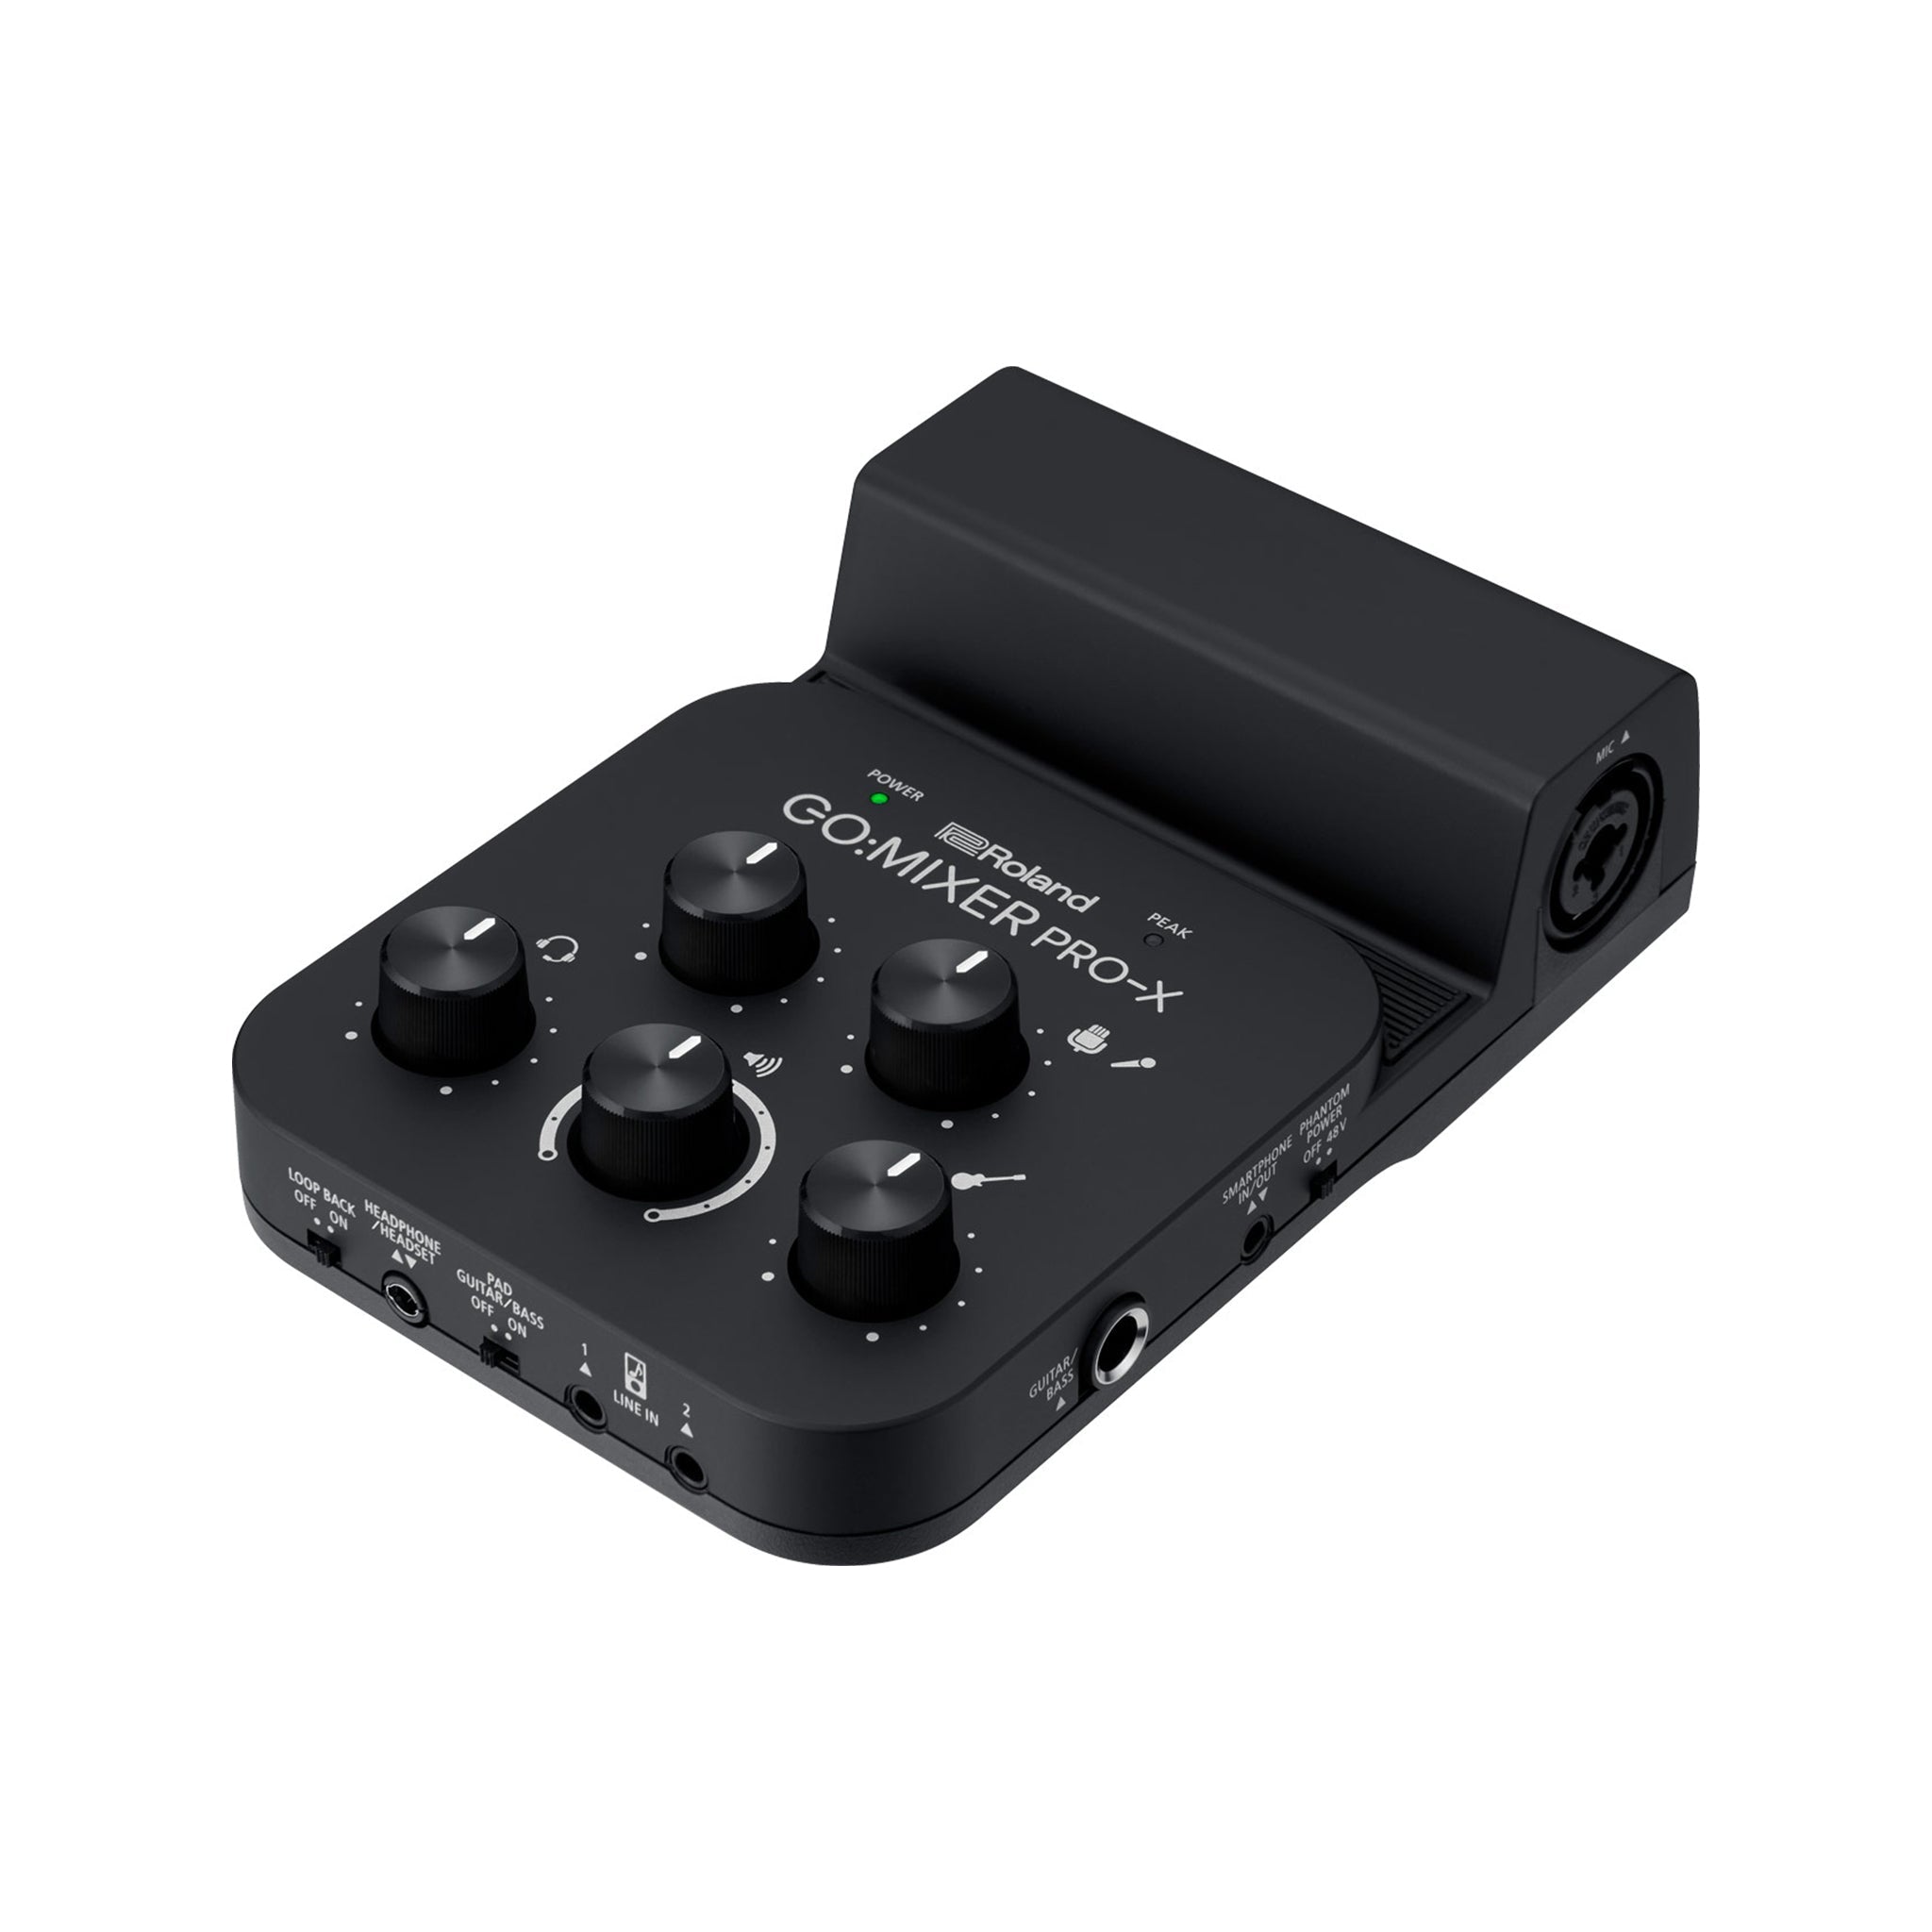 Roland GO:MIXER PRO-X Audio Mixer for Smartphones